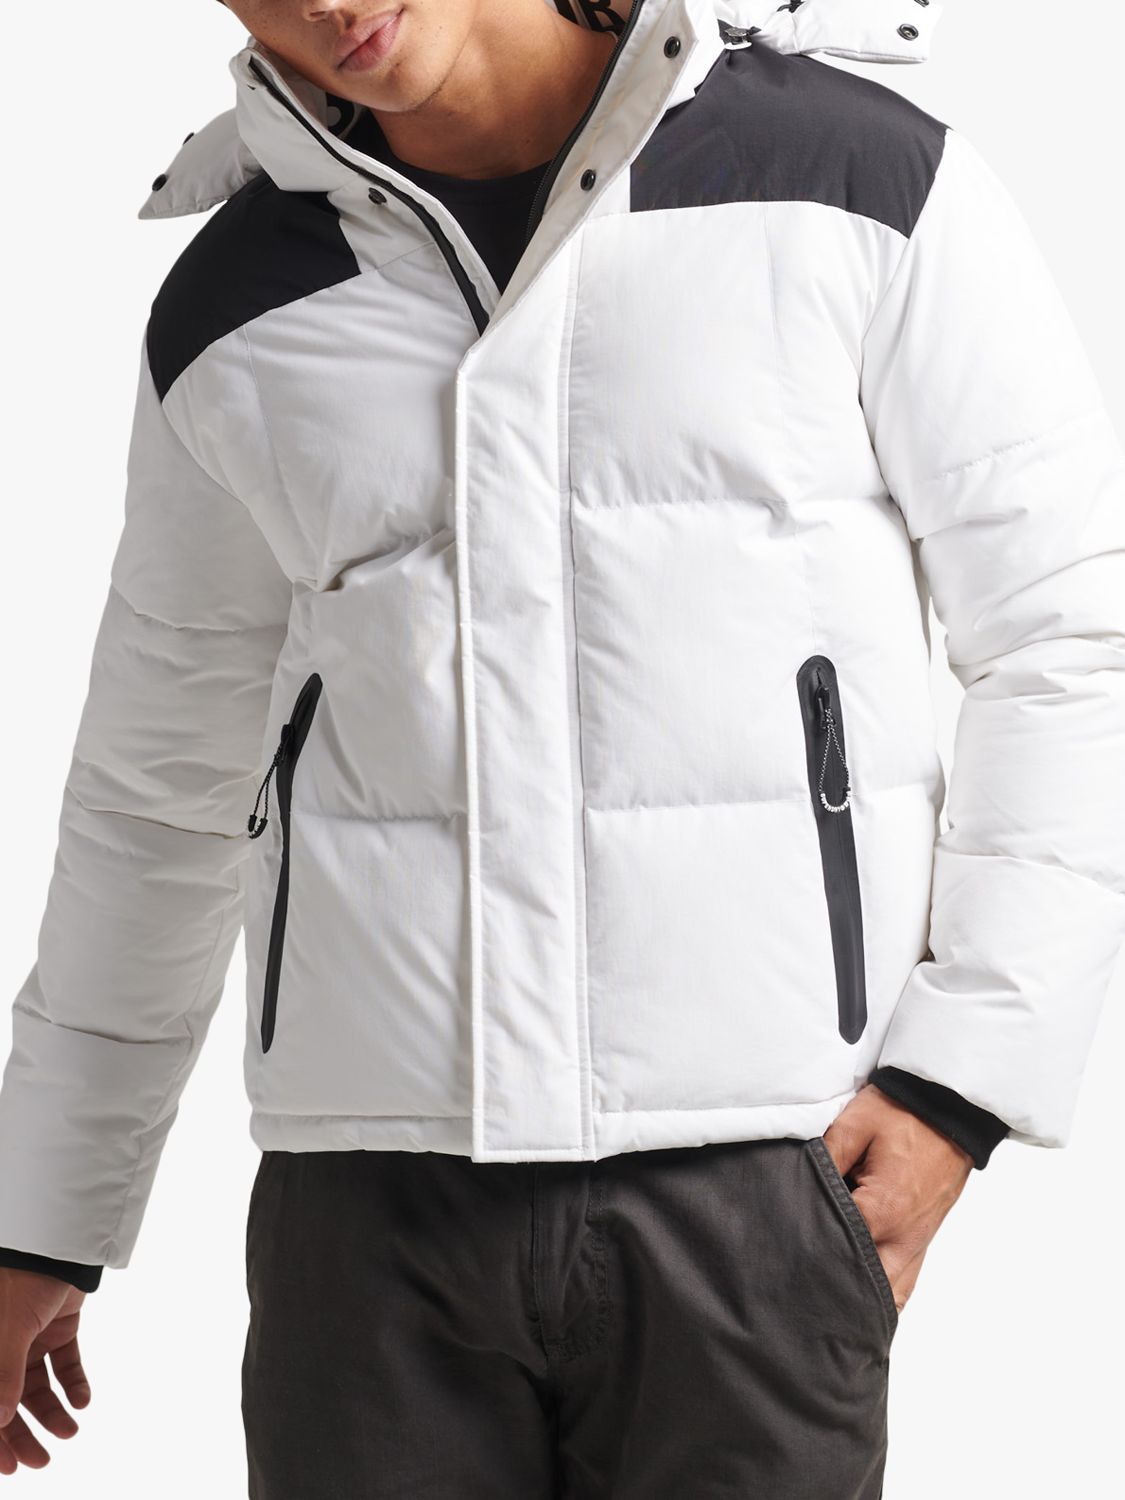 Стеганая куртка-пуховик с капюшоном Superdry Box, оптика цена и фото